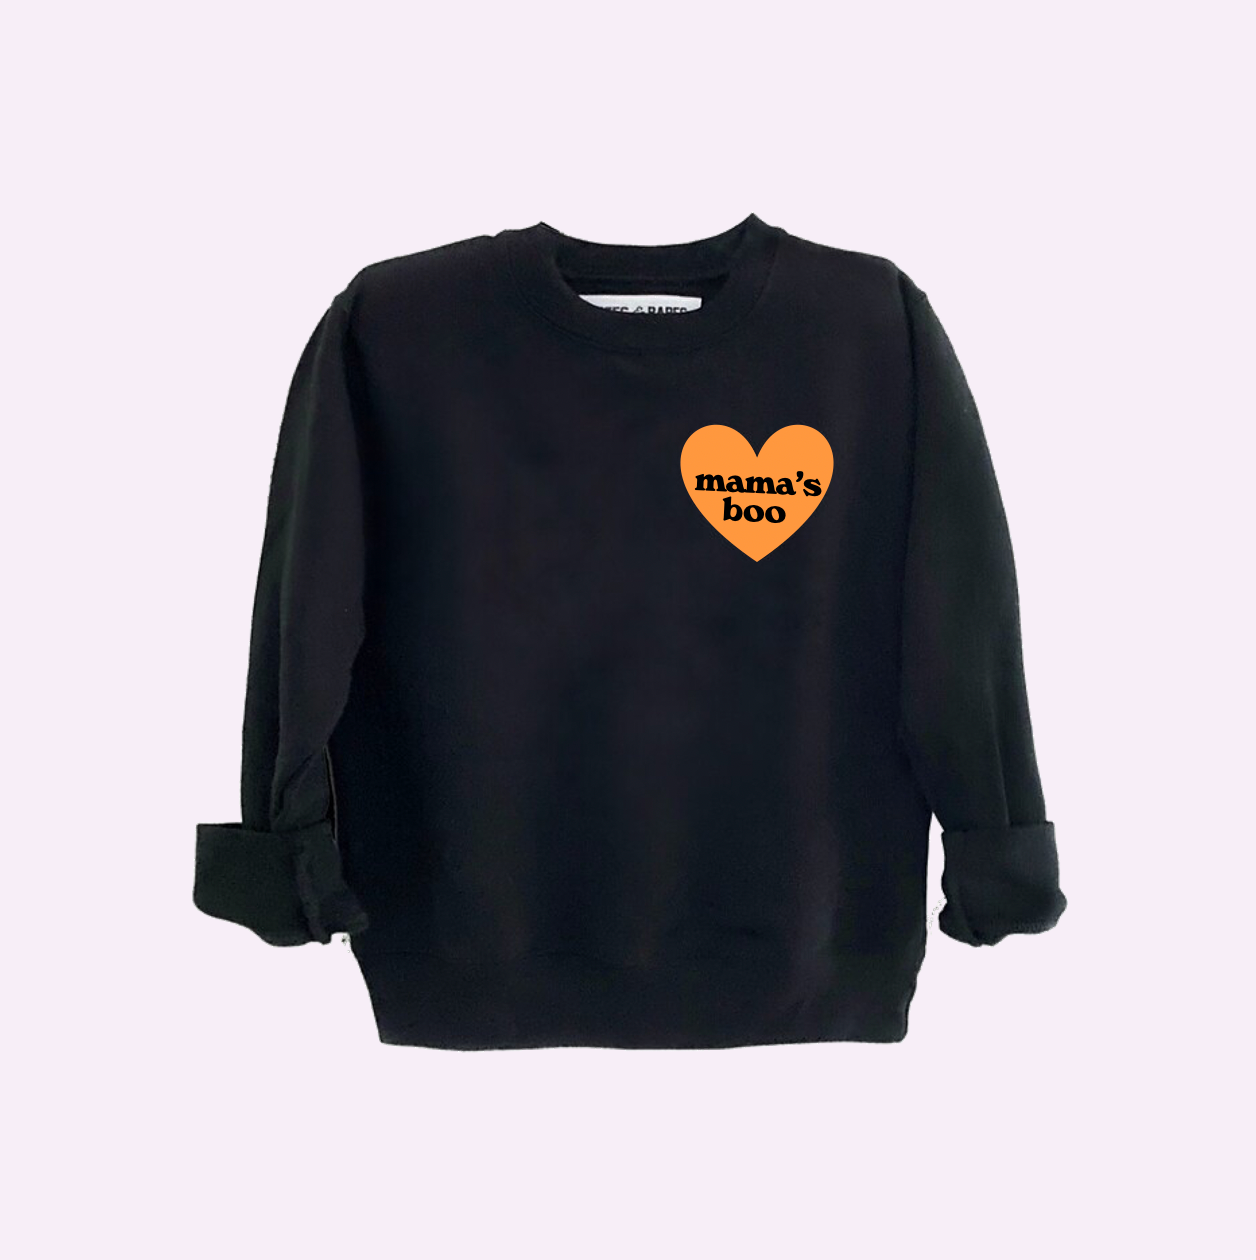 HEART U MOST ♡ black youth sweatshirt with orange heart